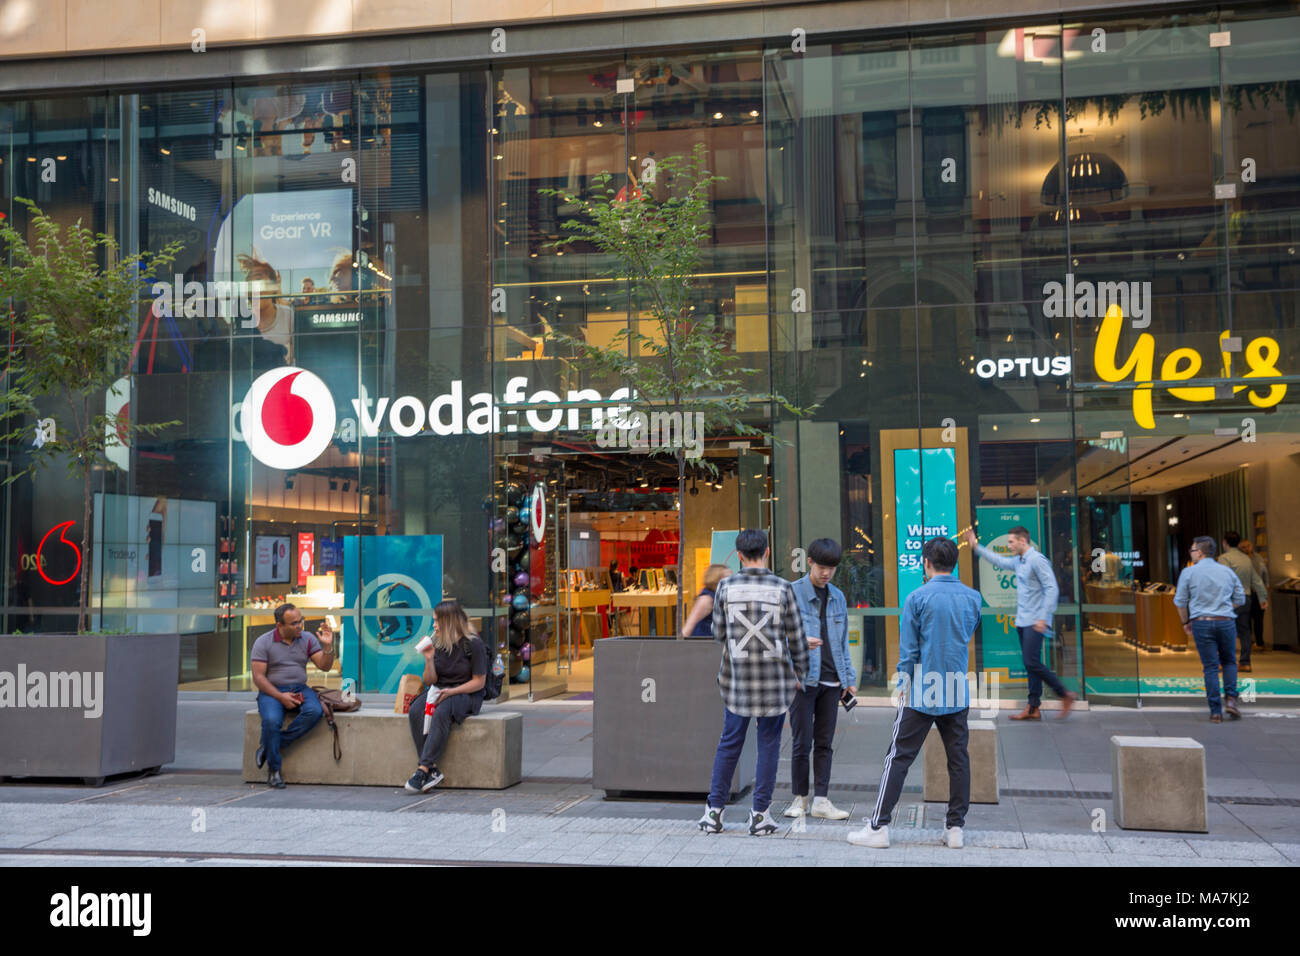 Vodafone and Optus retail stores in George street,Sydney,Australia Stock Photo